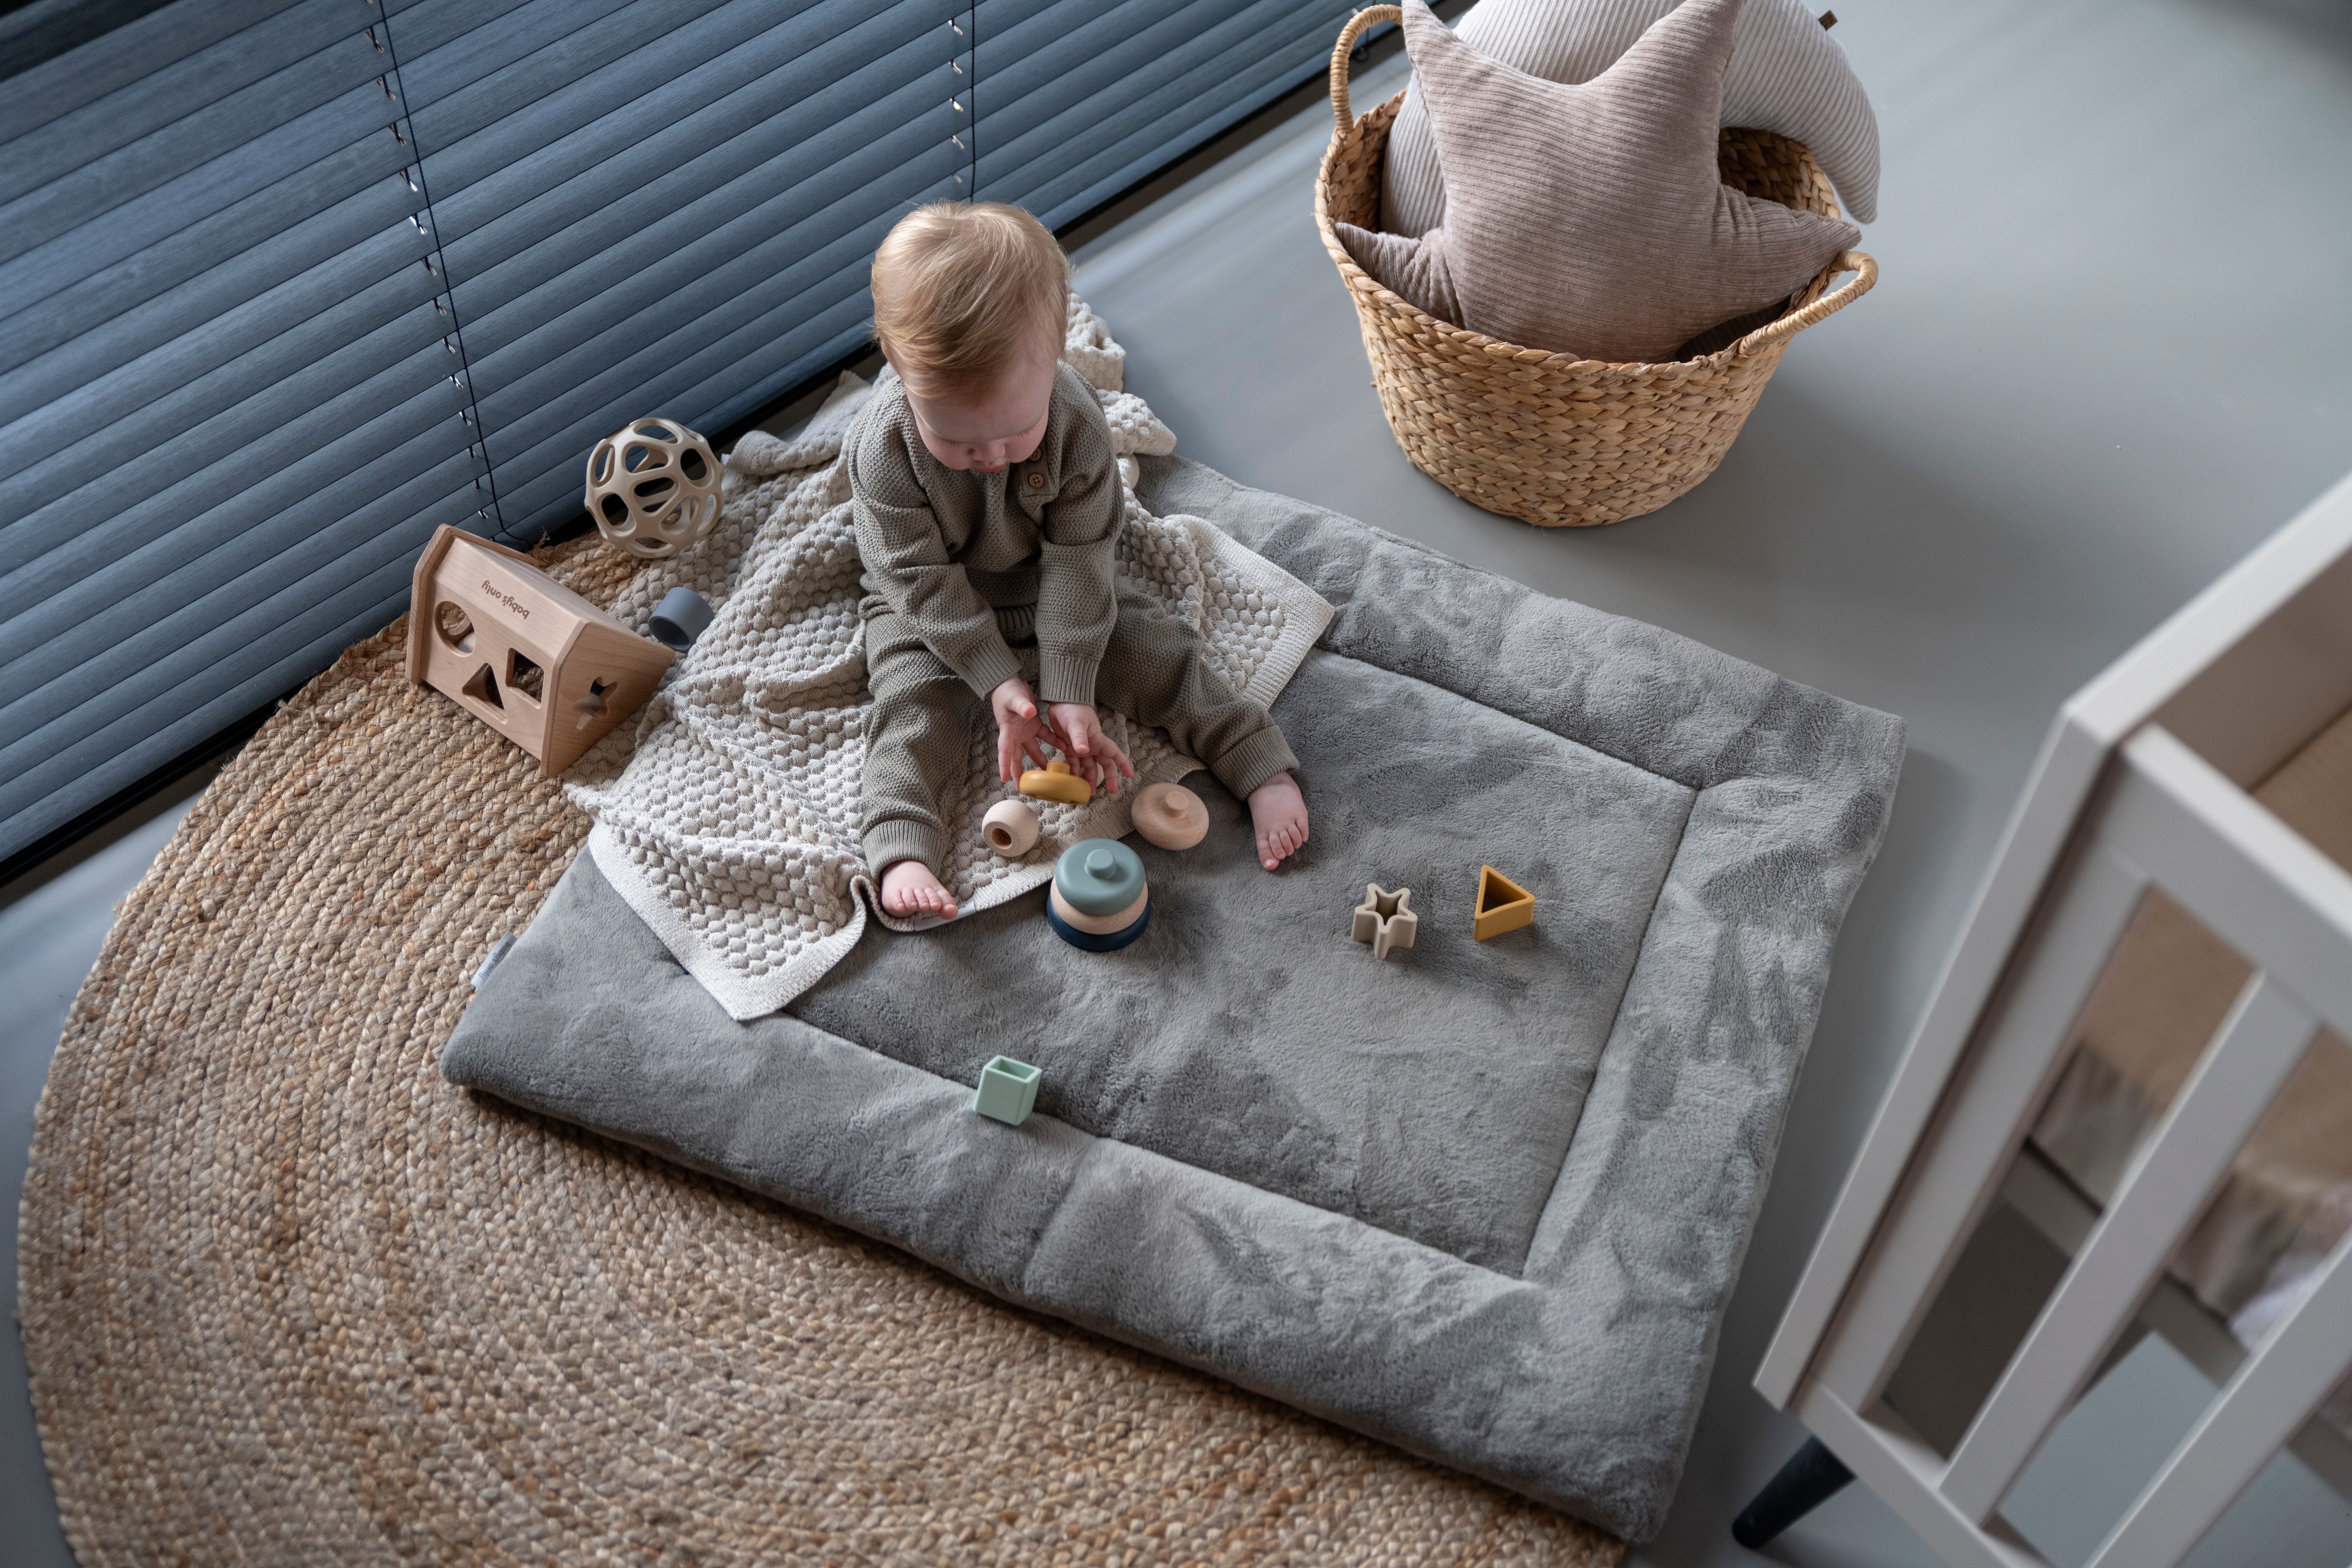 Playpen mat Cozy warm linen - 75x95